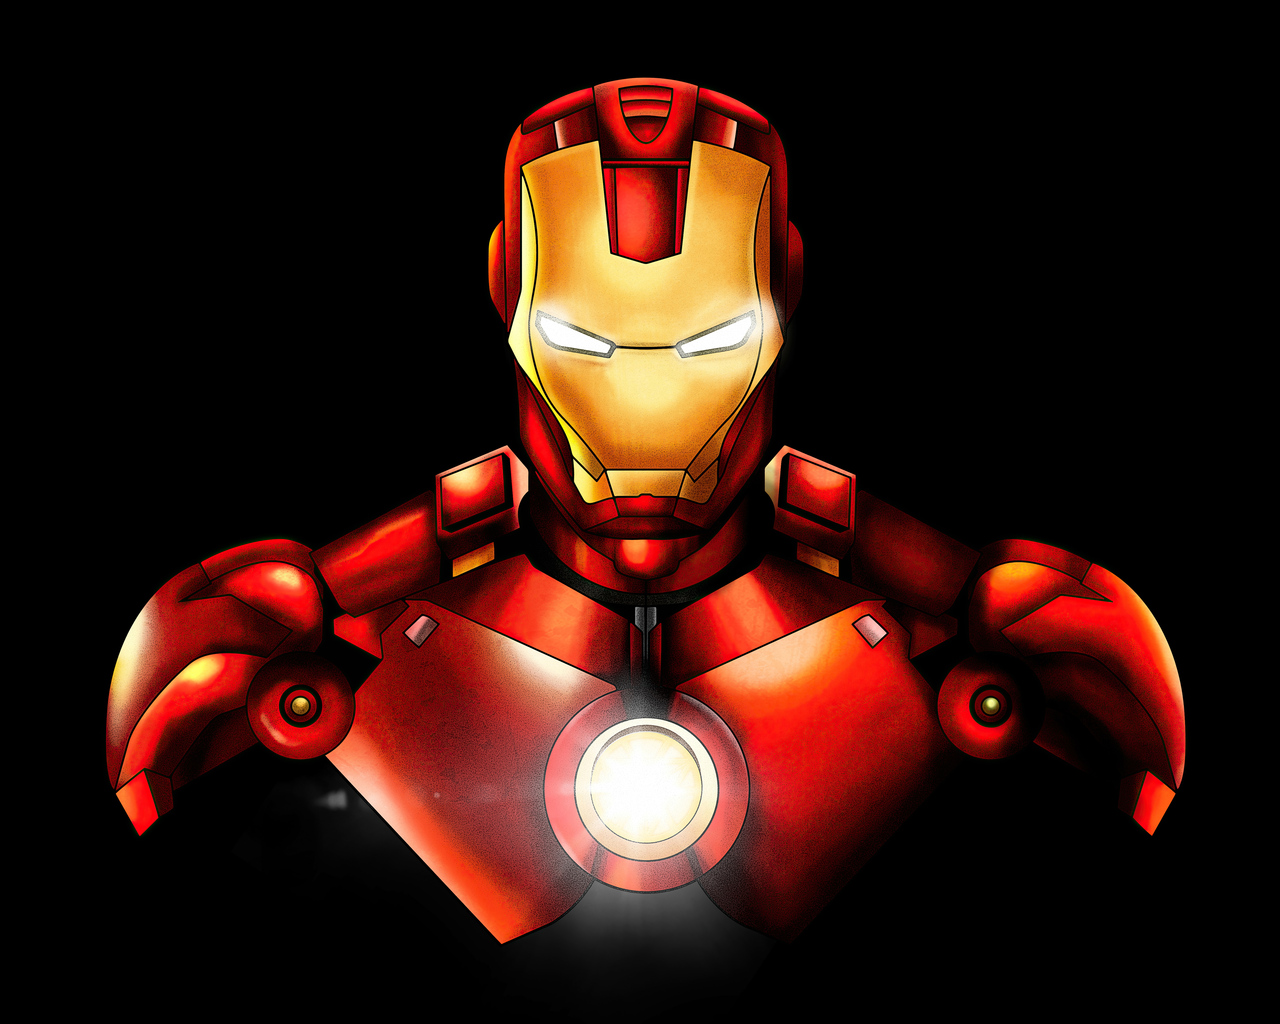 Marvel Iron Man Art Wallpapers